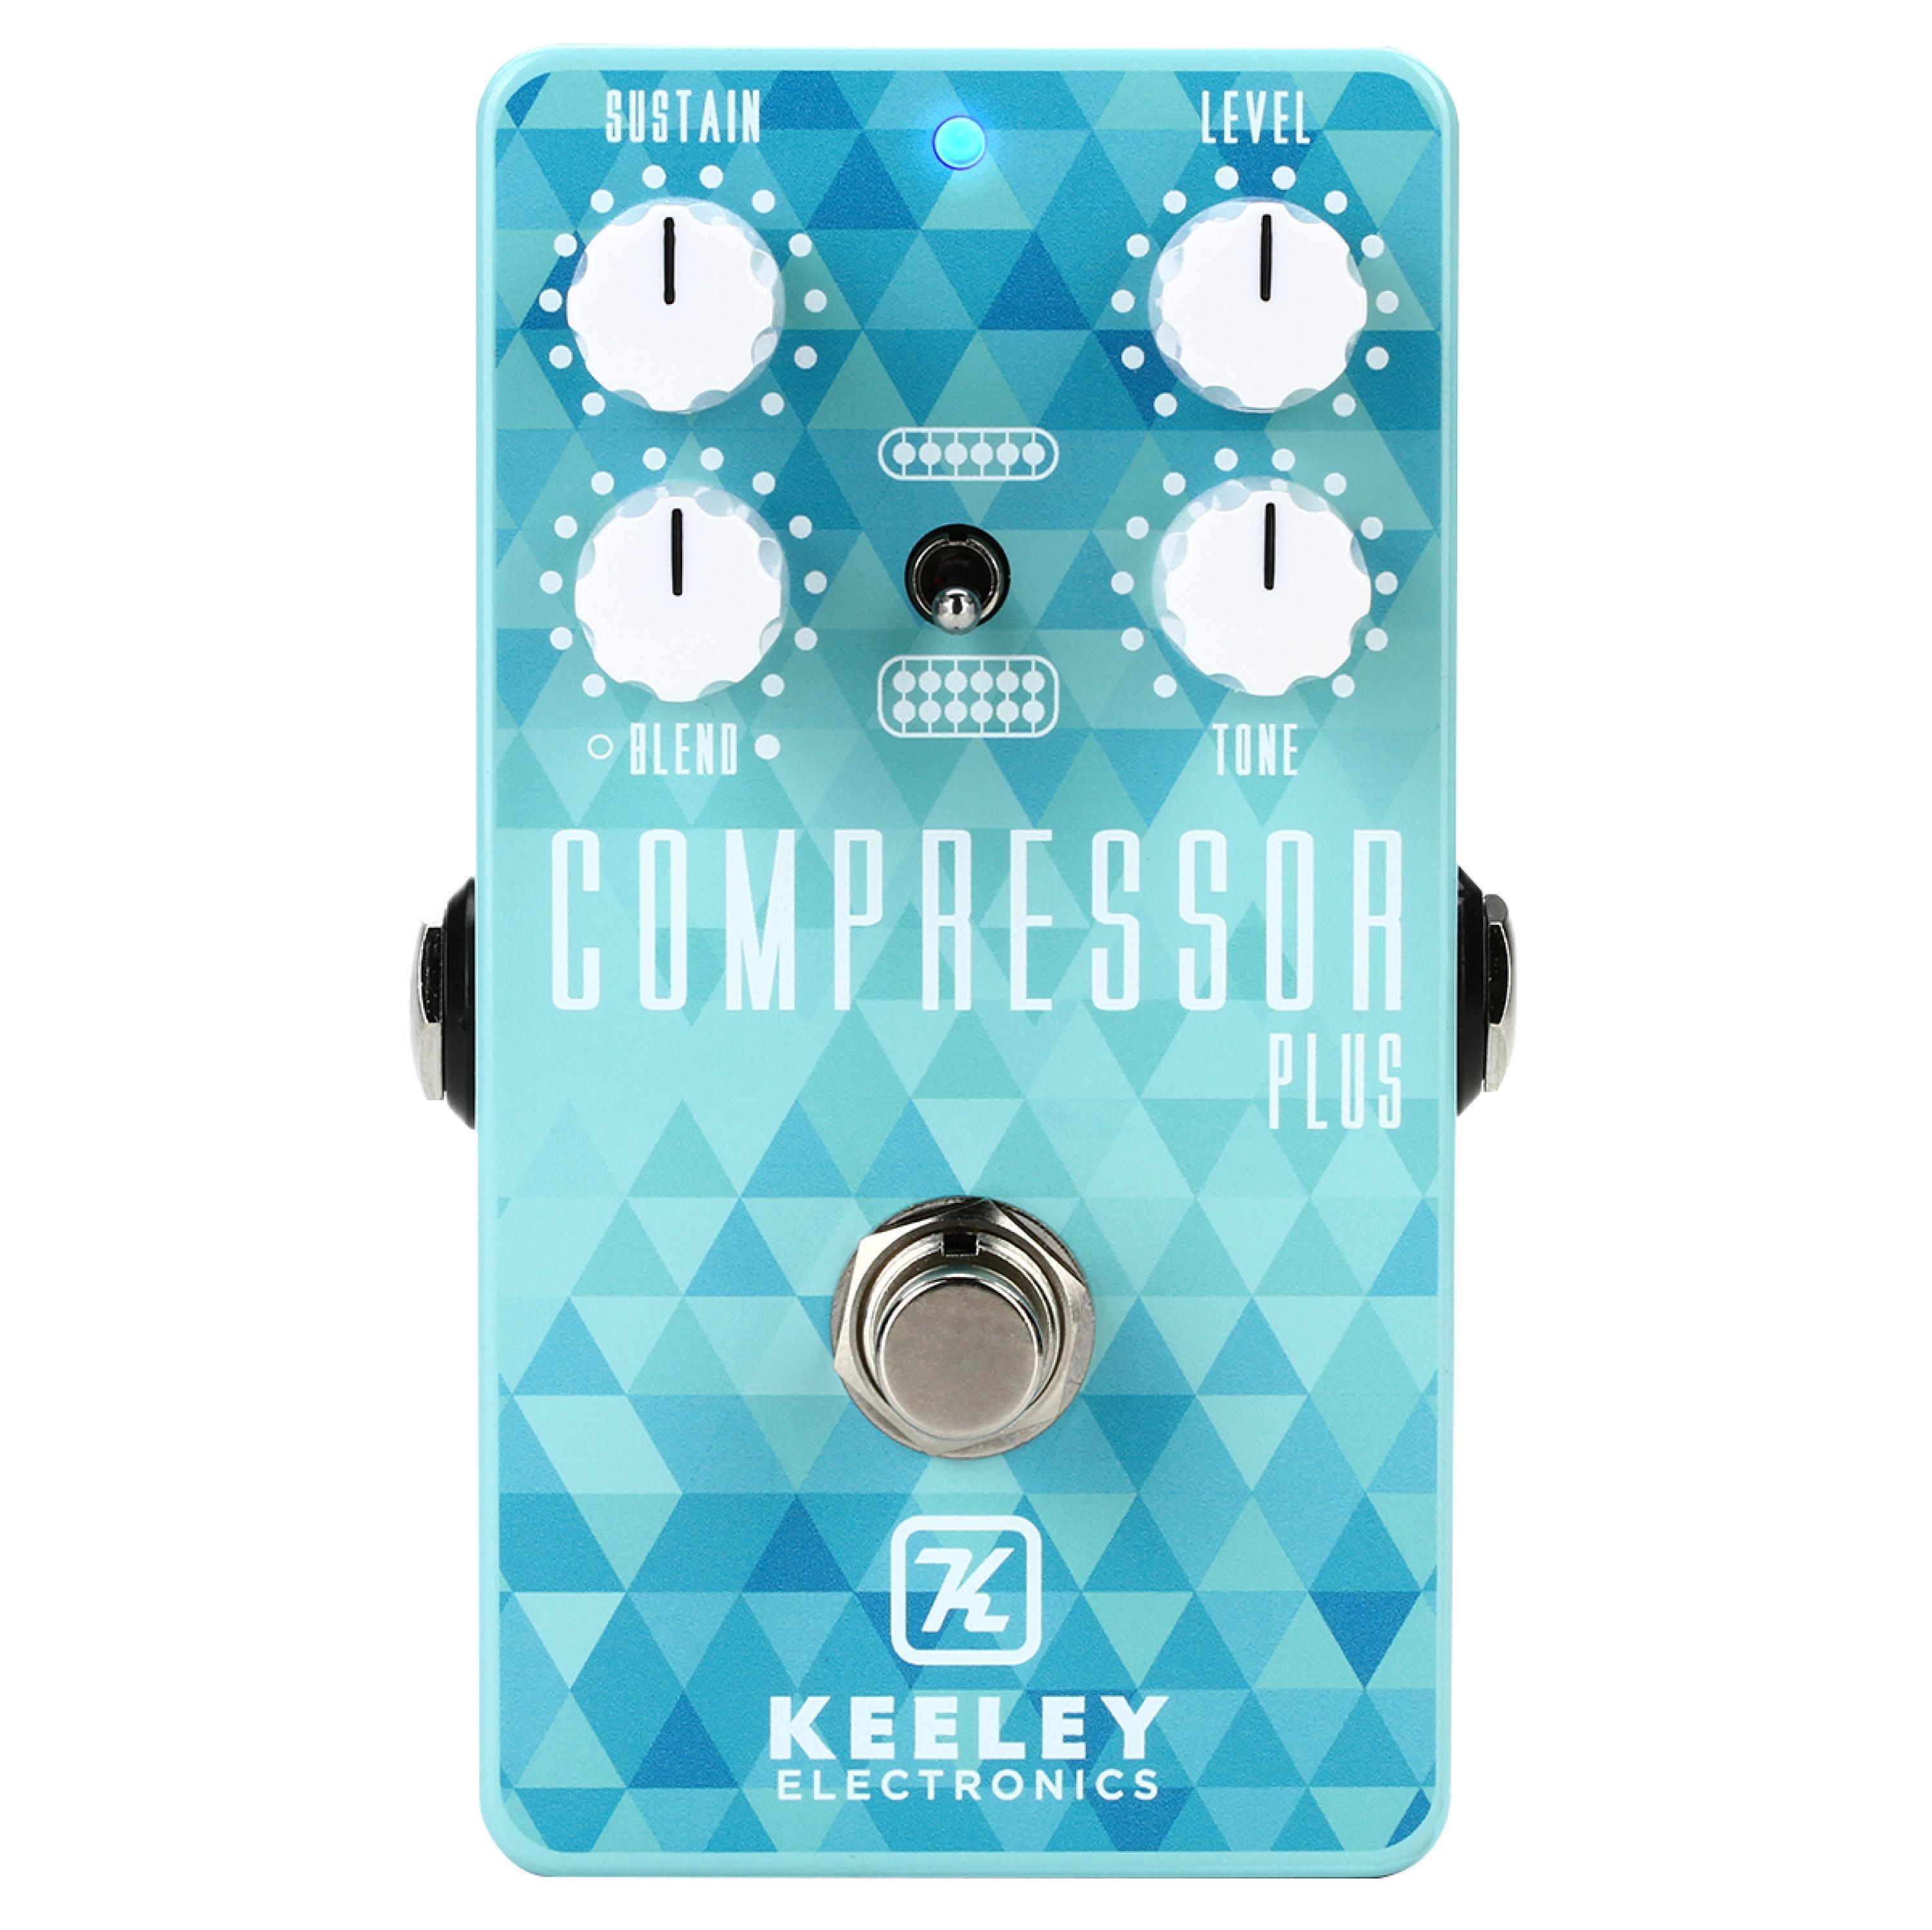 Keeley Compressor Plus Compressor Pedal - Limited Edition